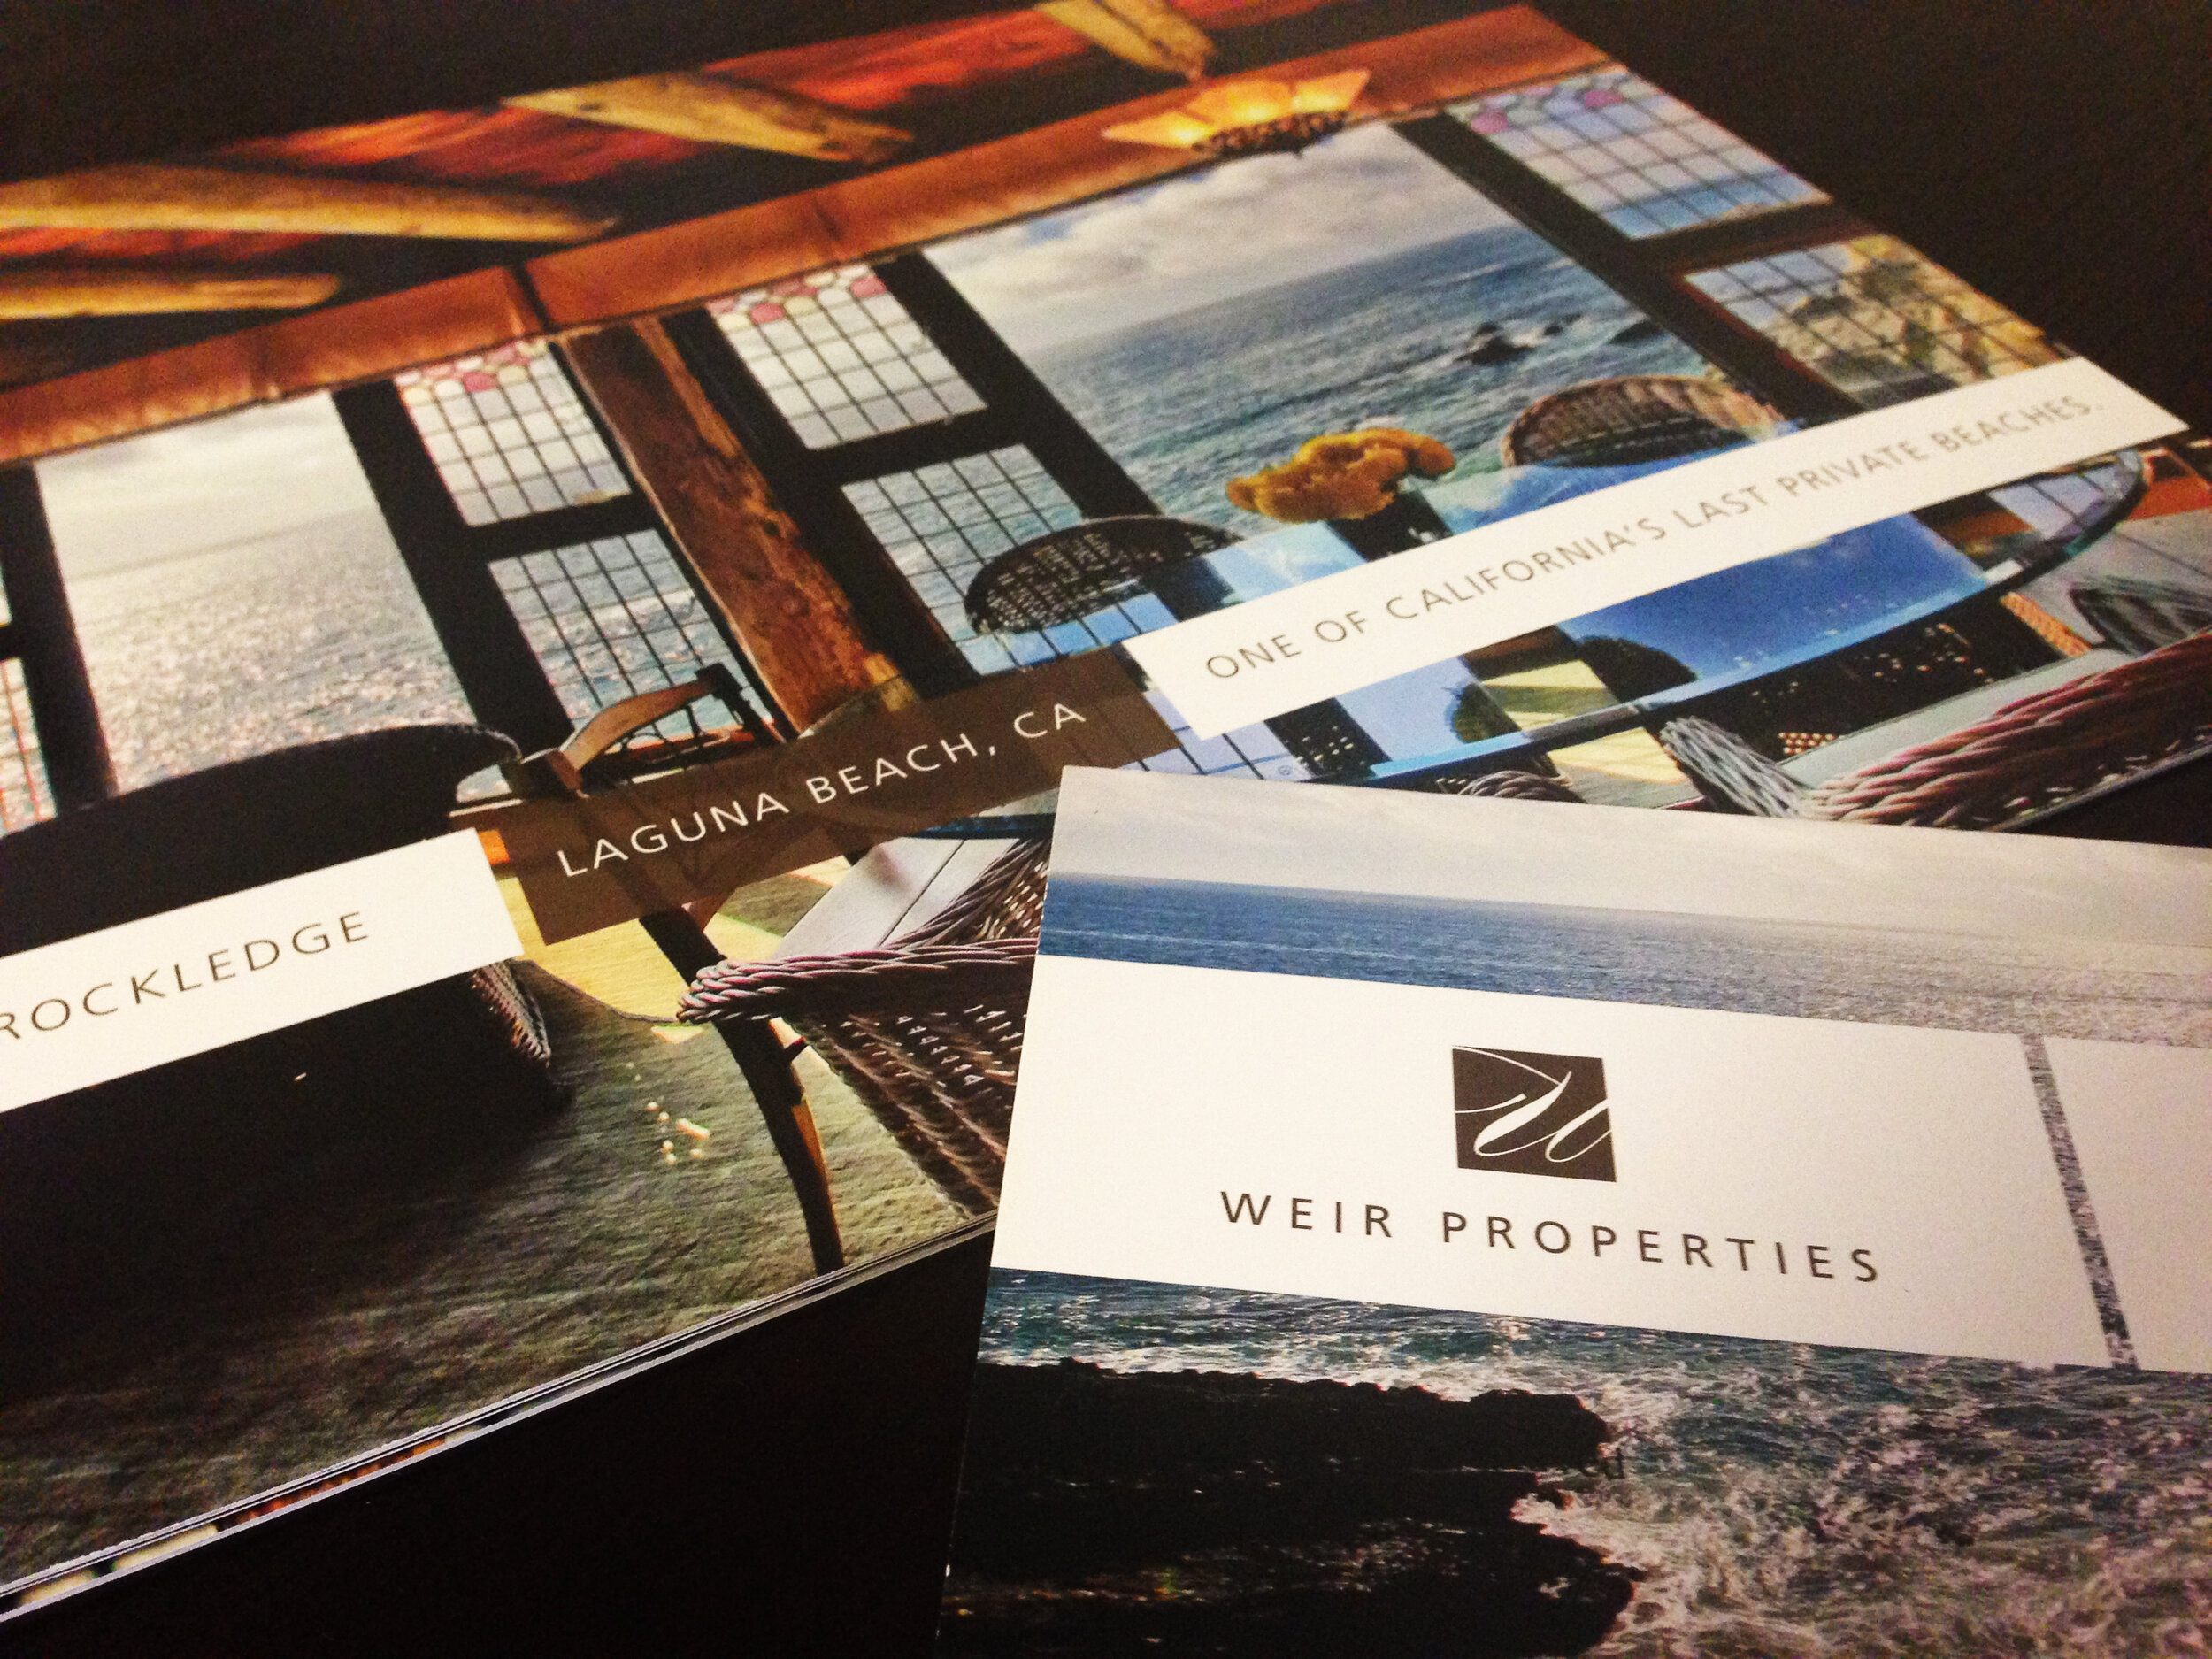 WEIR Property-Brochure-01.JPG